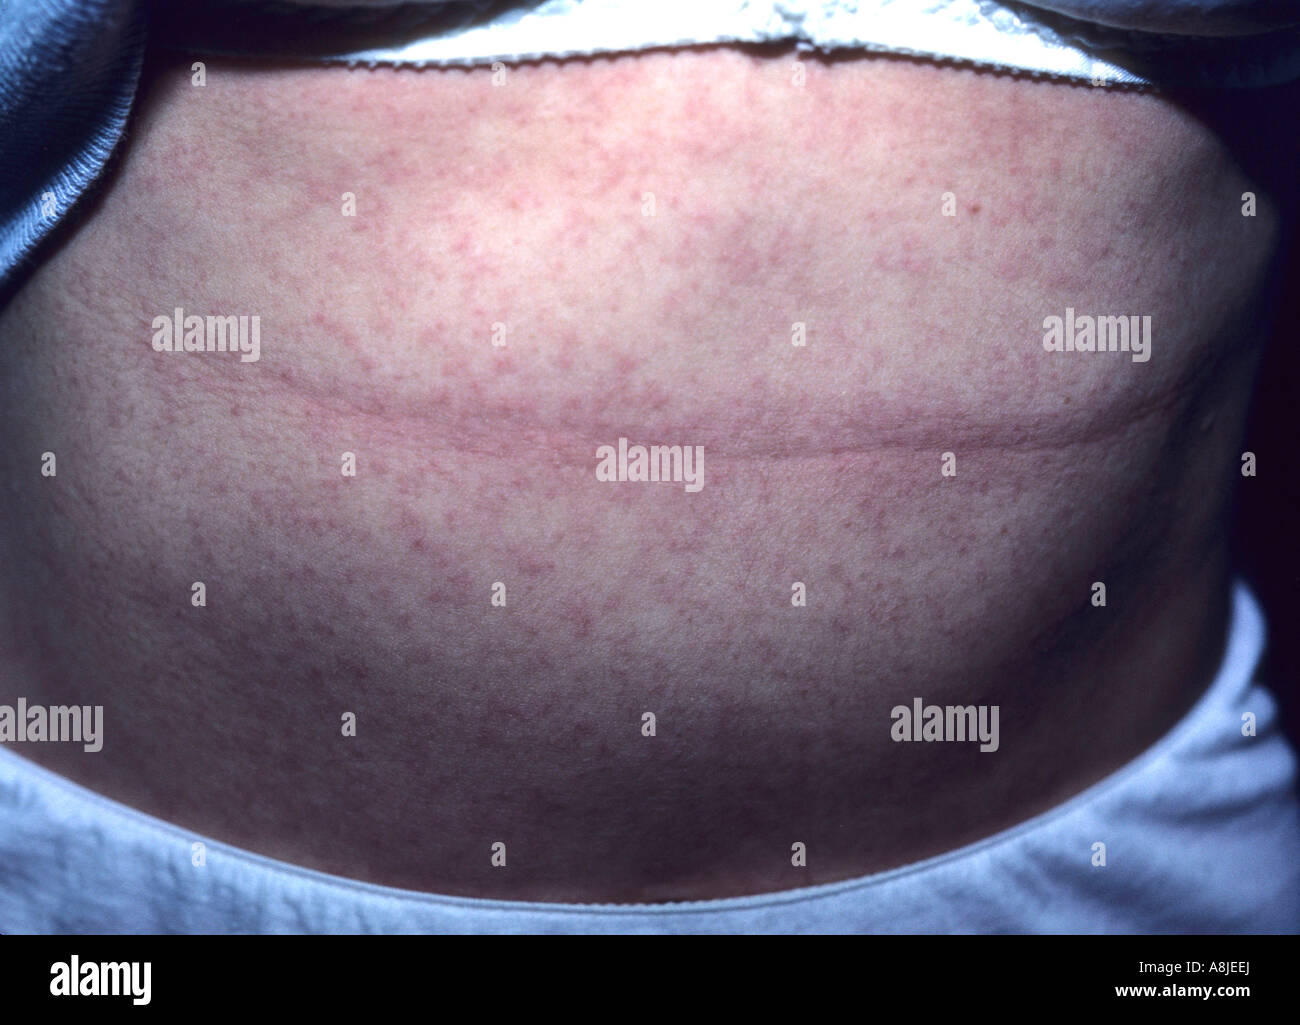 Allergic contact eczema (dermatitis) rash on the patient's abdomen. Stock Photo